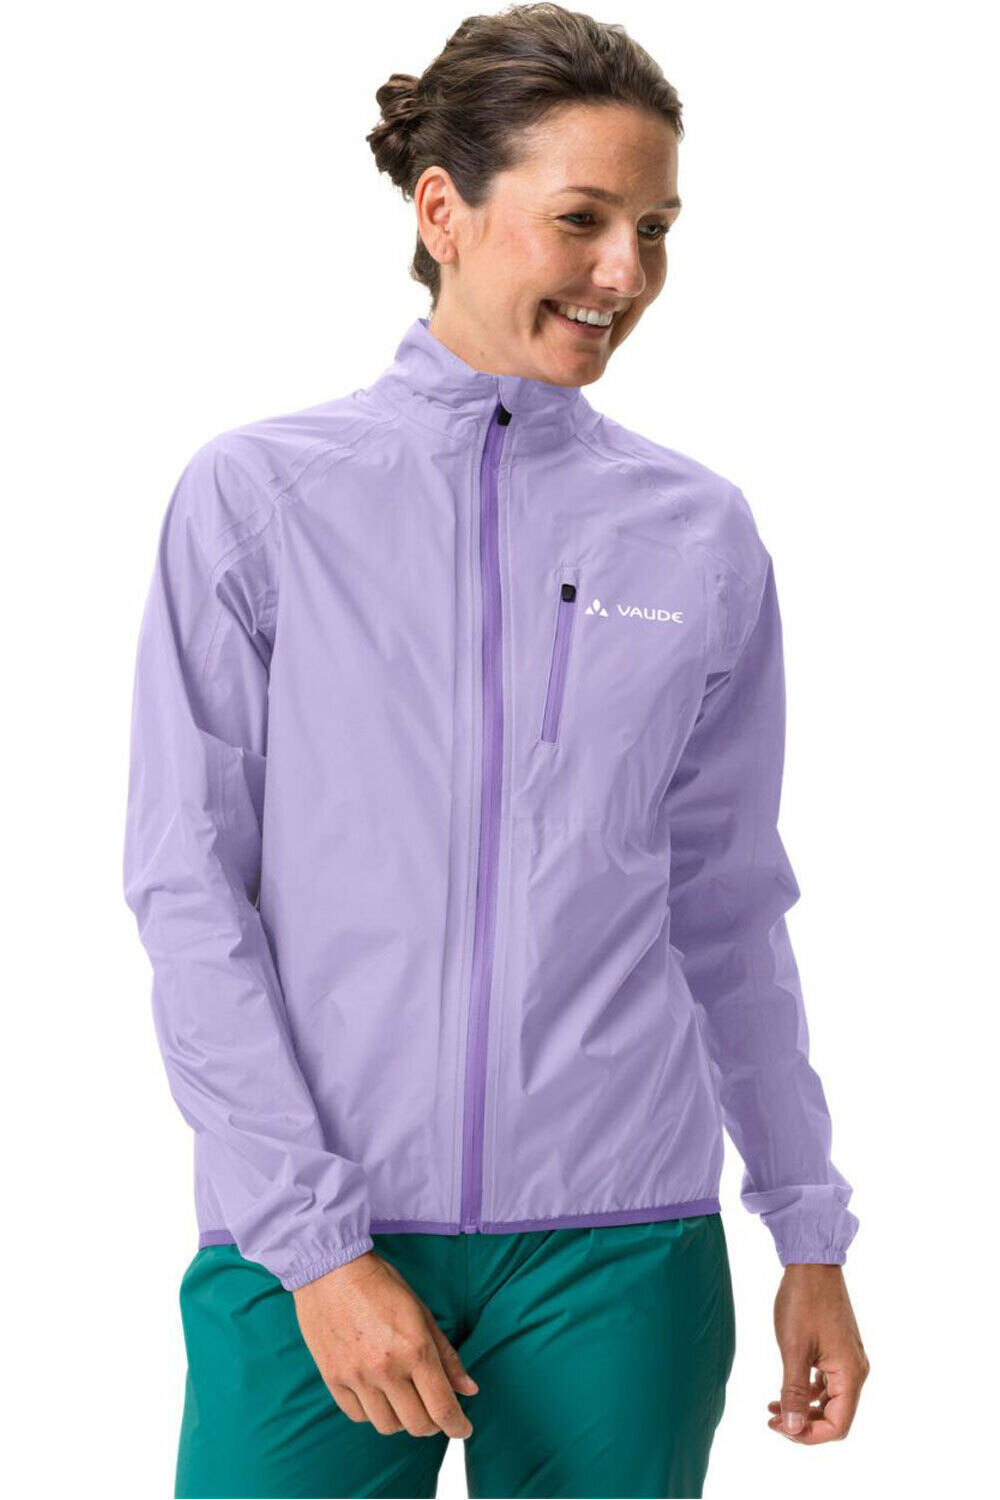 Vaude chaqueta impermeable ciclismo mujer Women's Drop Jacket III vista frontal